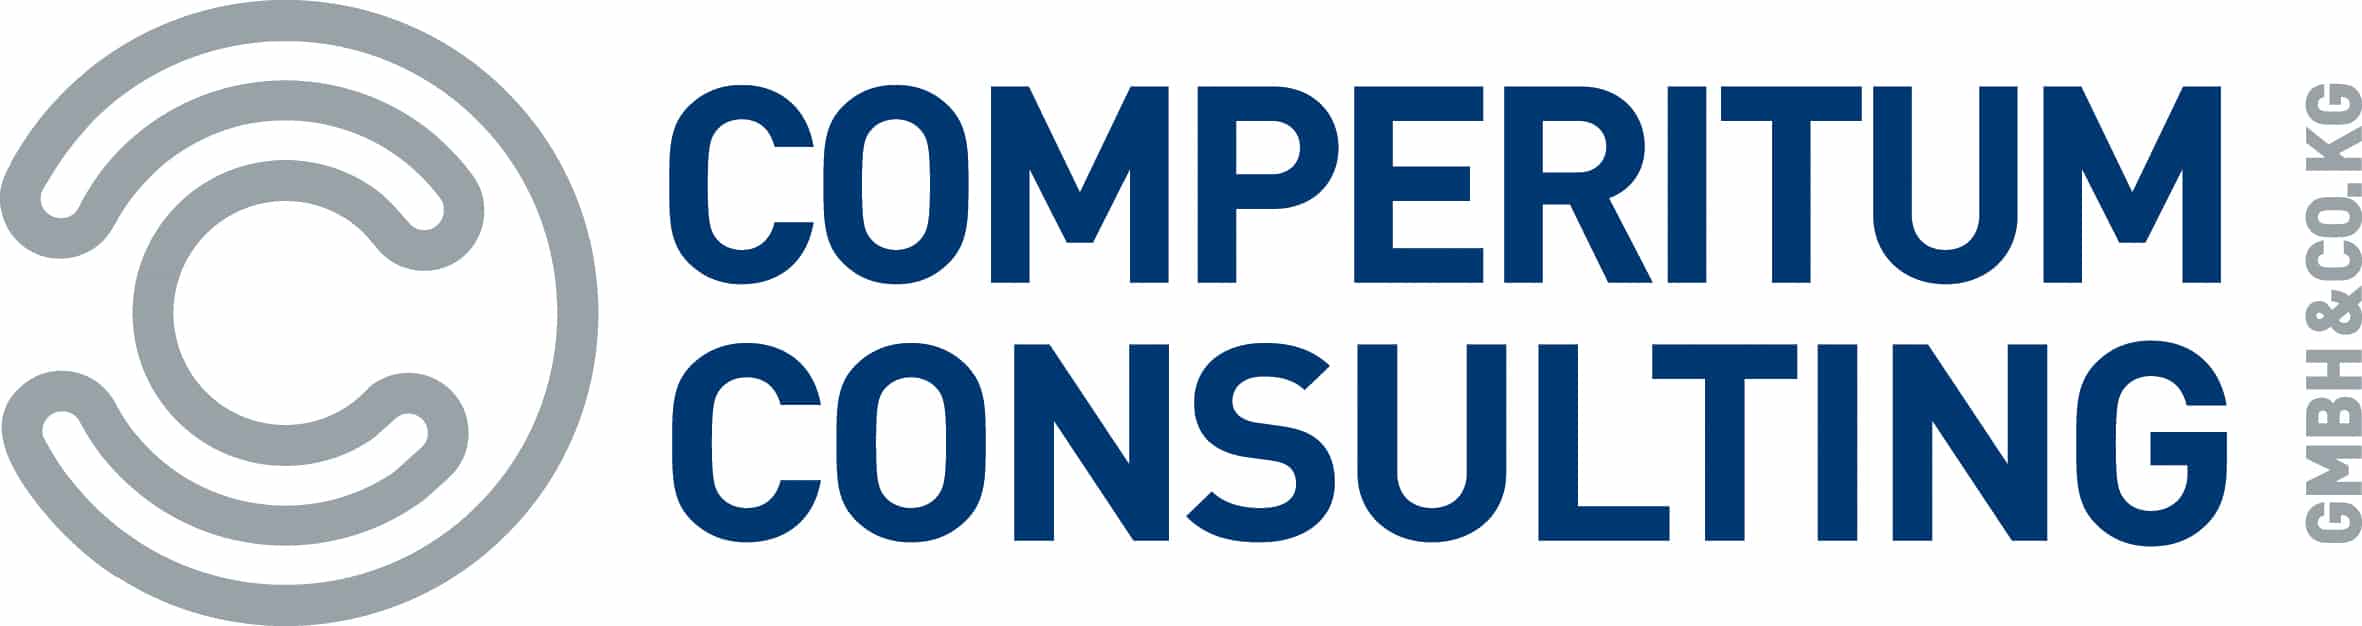 Logo ComperitumConsulting RGB pos - Alle Mitglieder